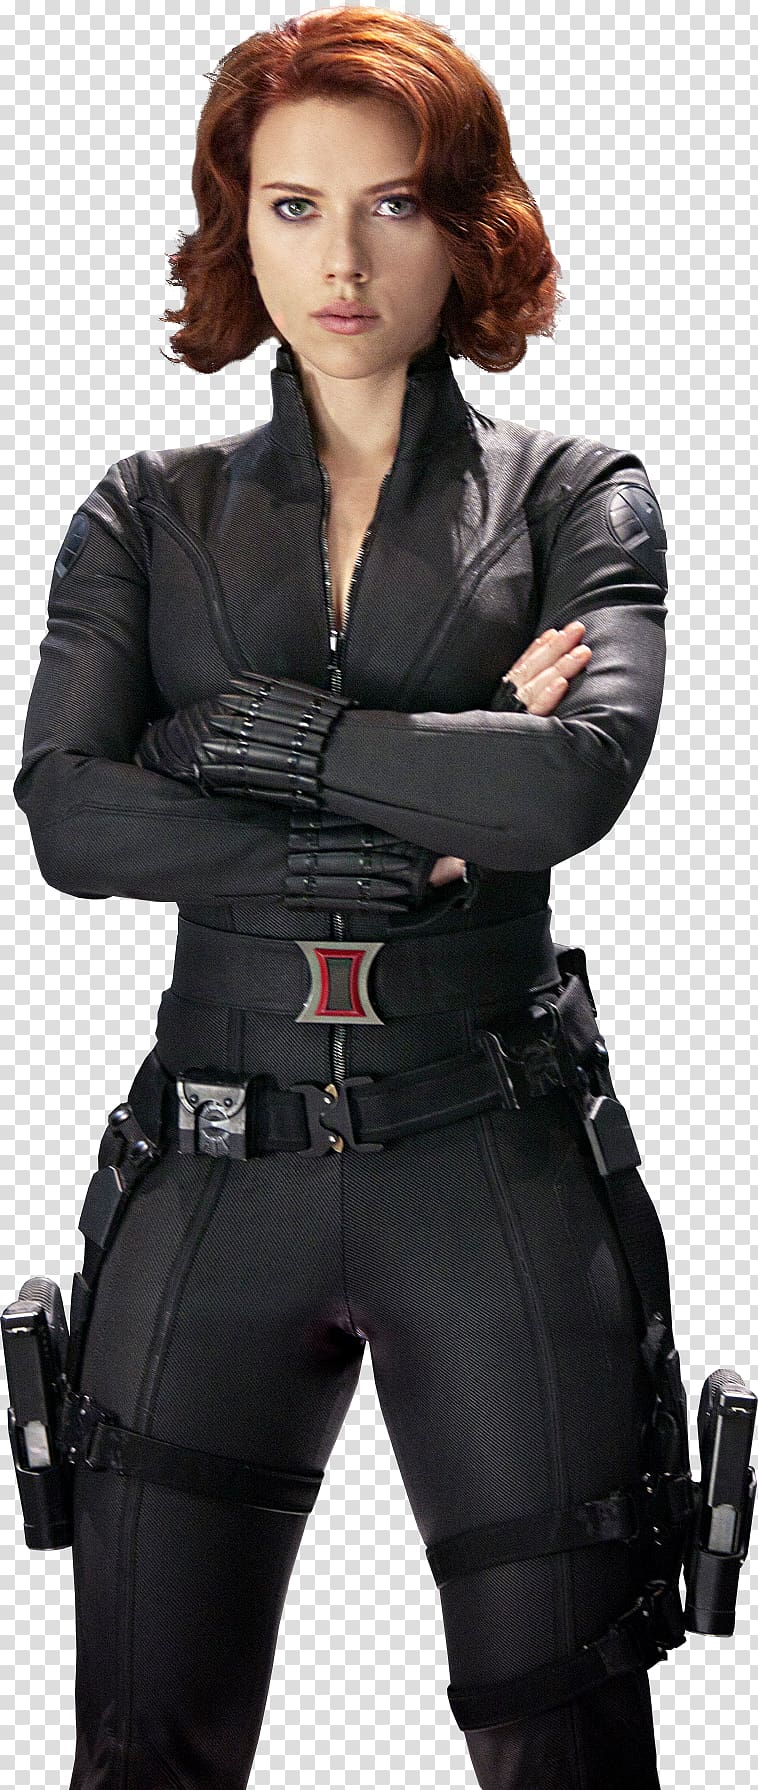 Black Widow, Scarlett Johansson Black Widow The Avengers Cosplay Costume, Black Widow transparent background PNG clipart